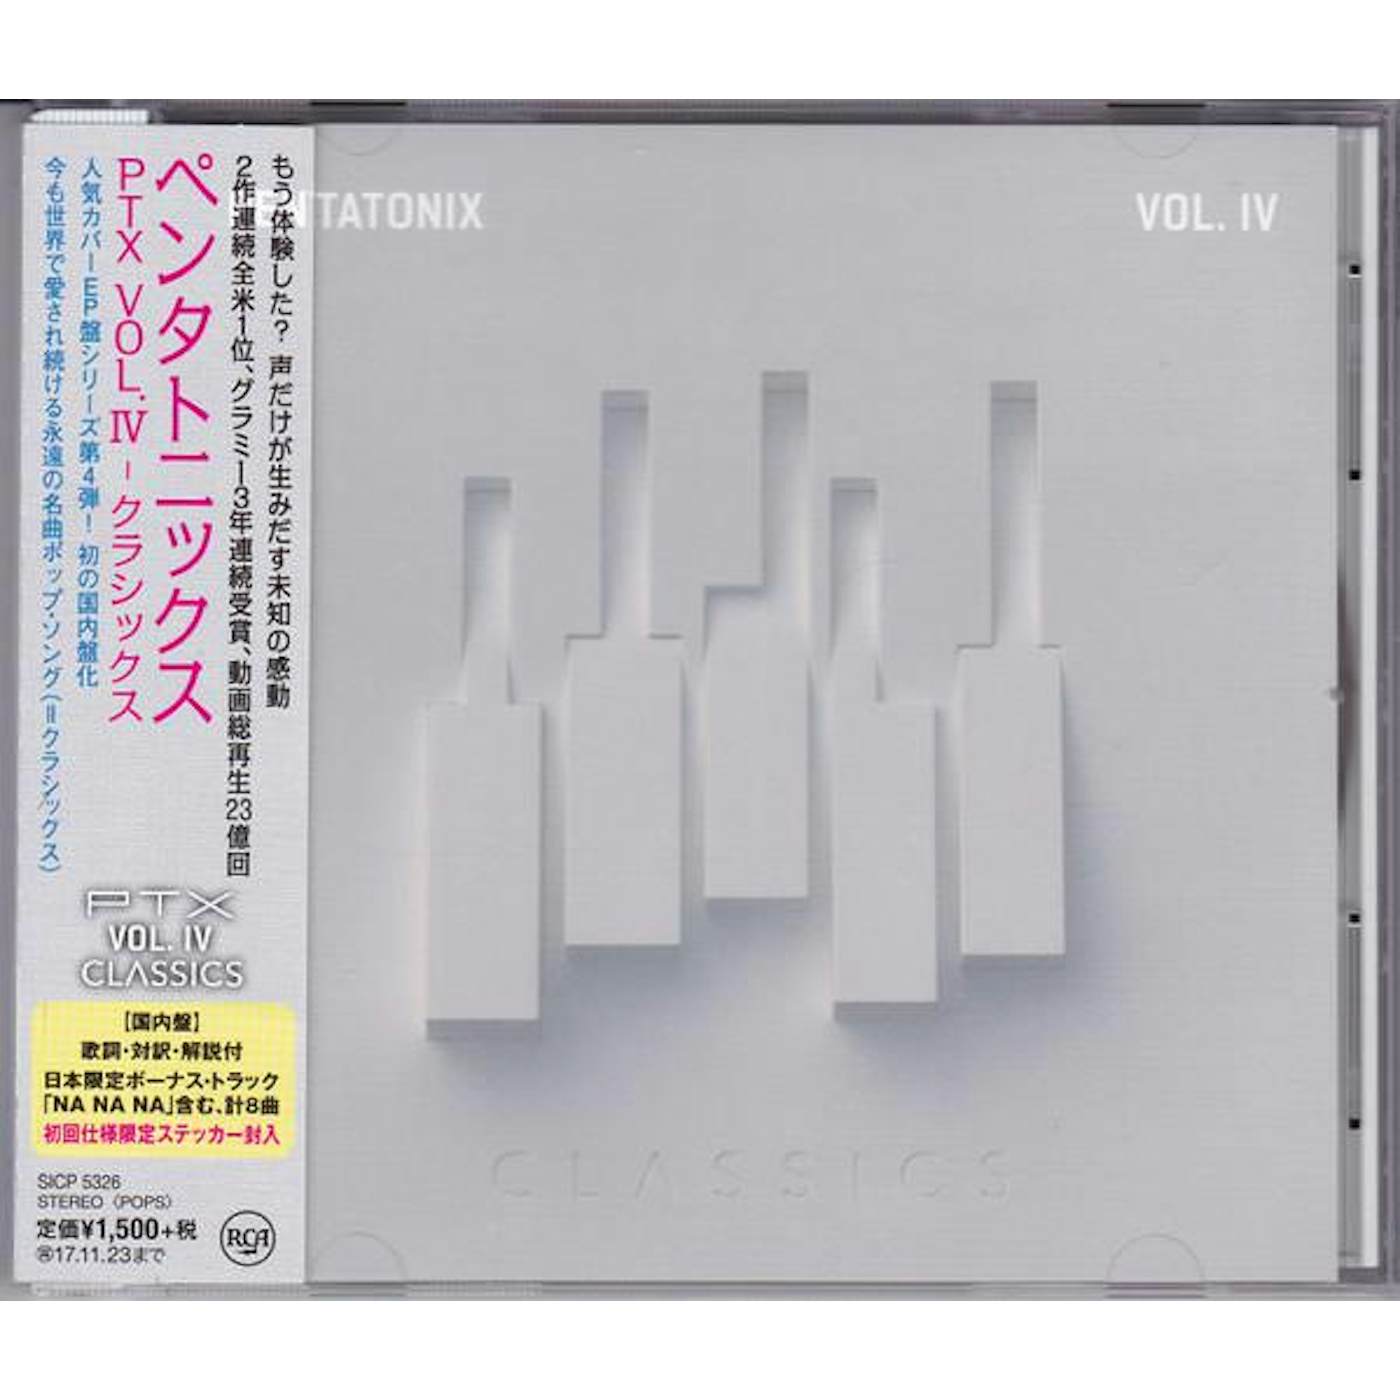 Pentatonix PTX VOL.4 : CLASSICS (BONUS TRACK/STICKER) CD